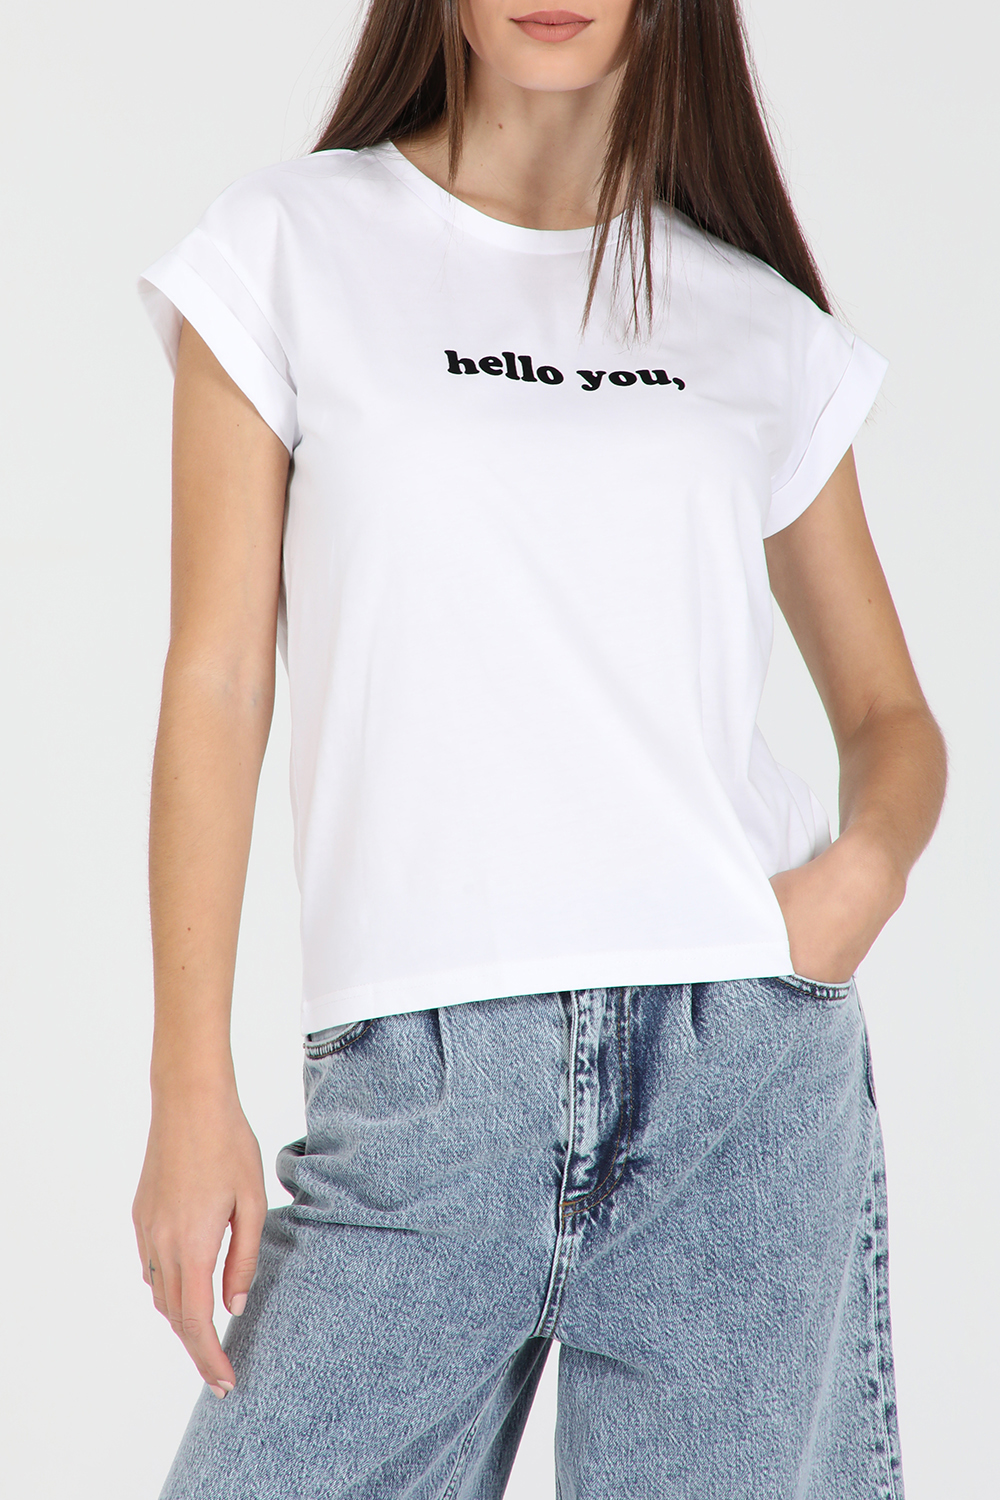 GRACE AND MILA – Γυναικειο κοντομανικο t-shirt GRACE AND MILA DAWSON εκρου